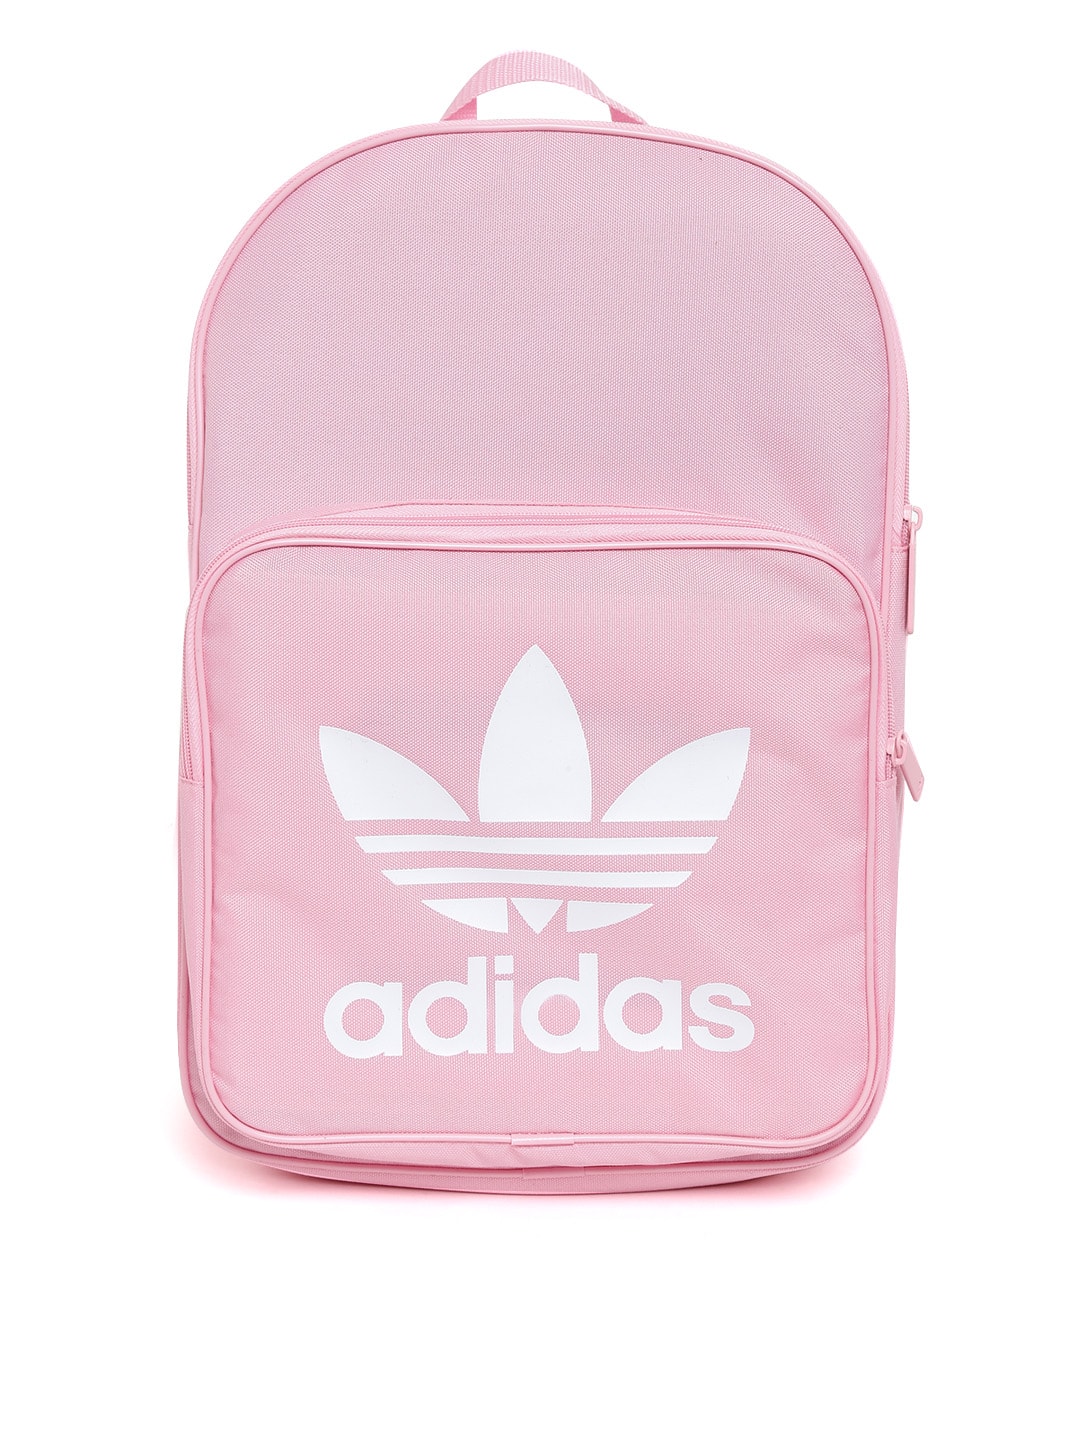 ADIDAS Originals Unisex Pink Classic Trefoil Brand Logo Print Laptop Backpack